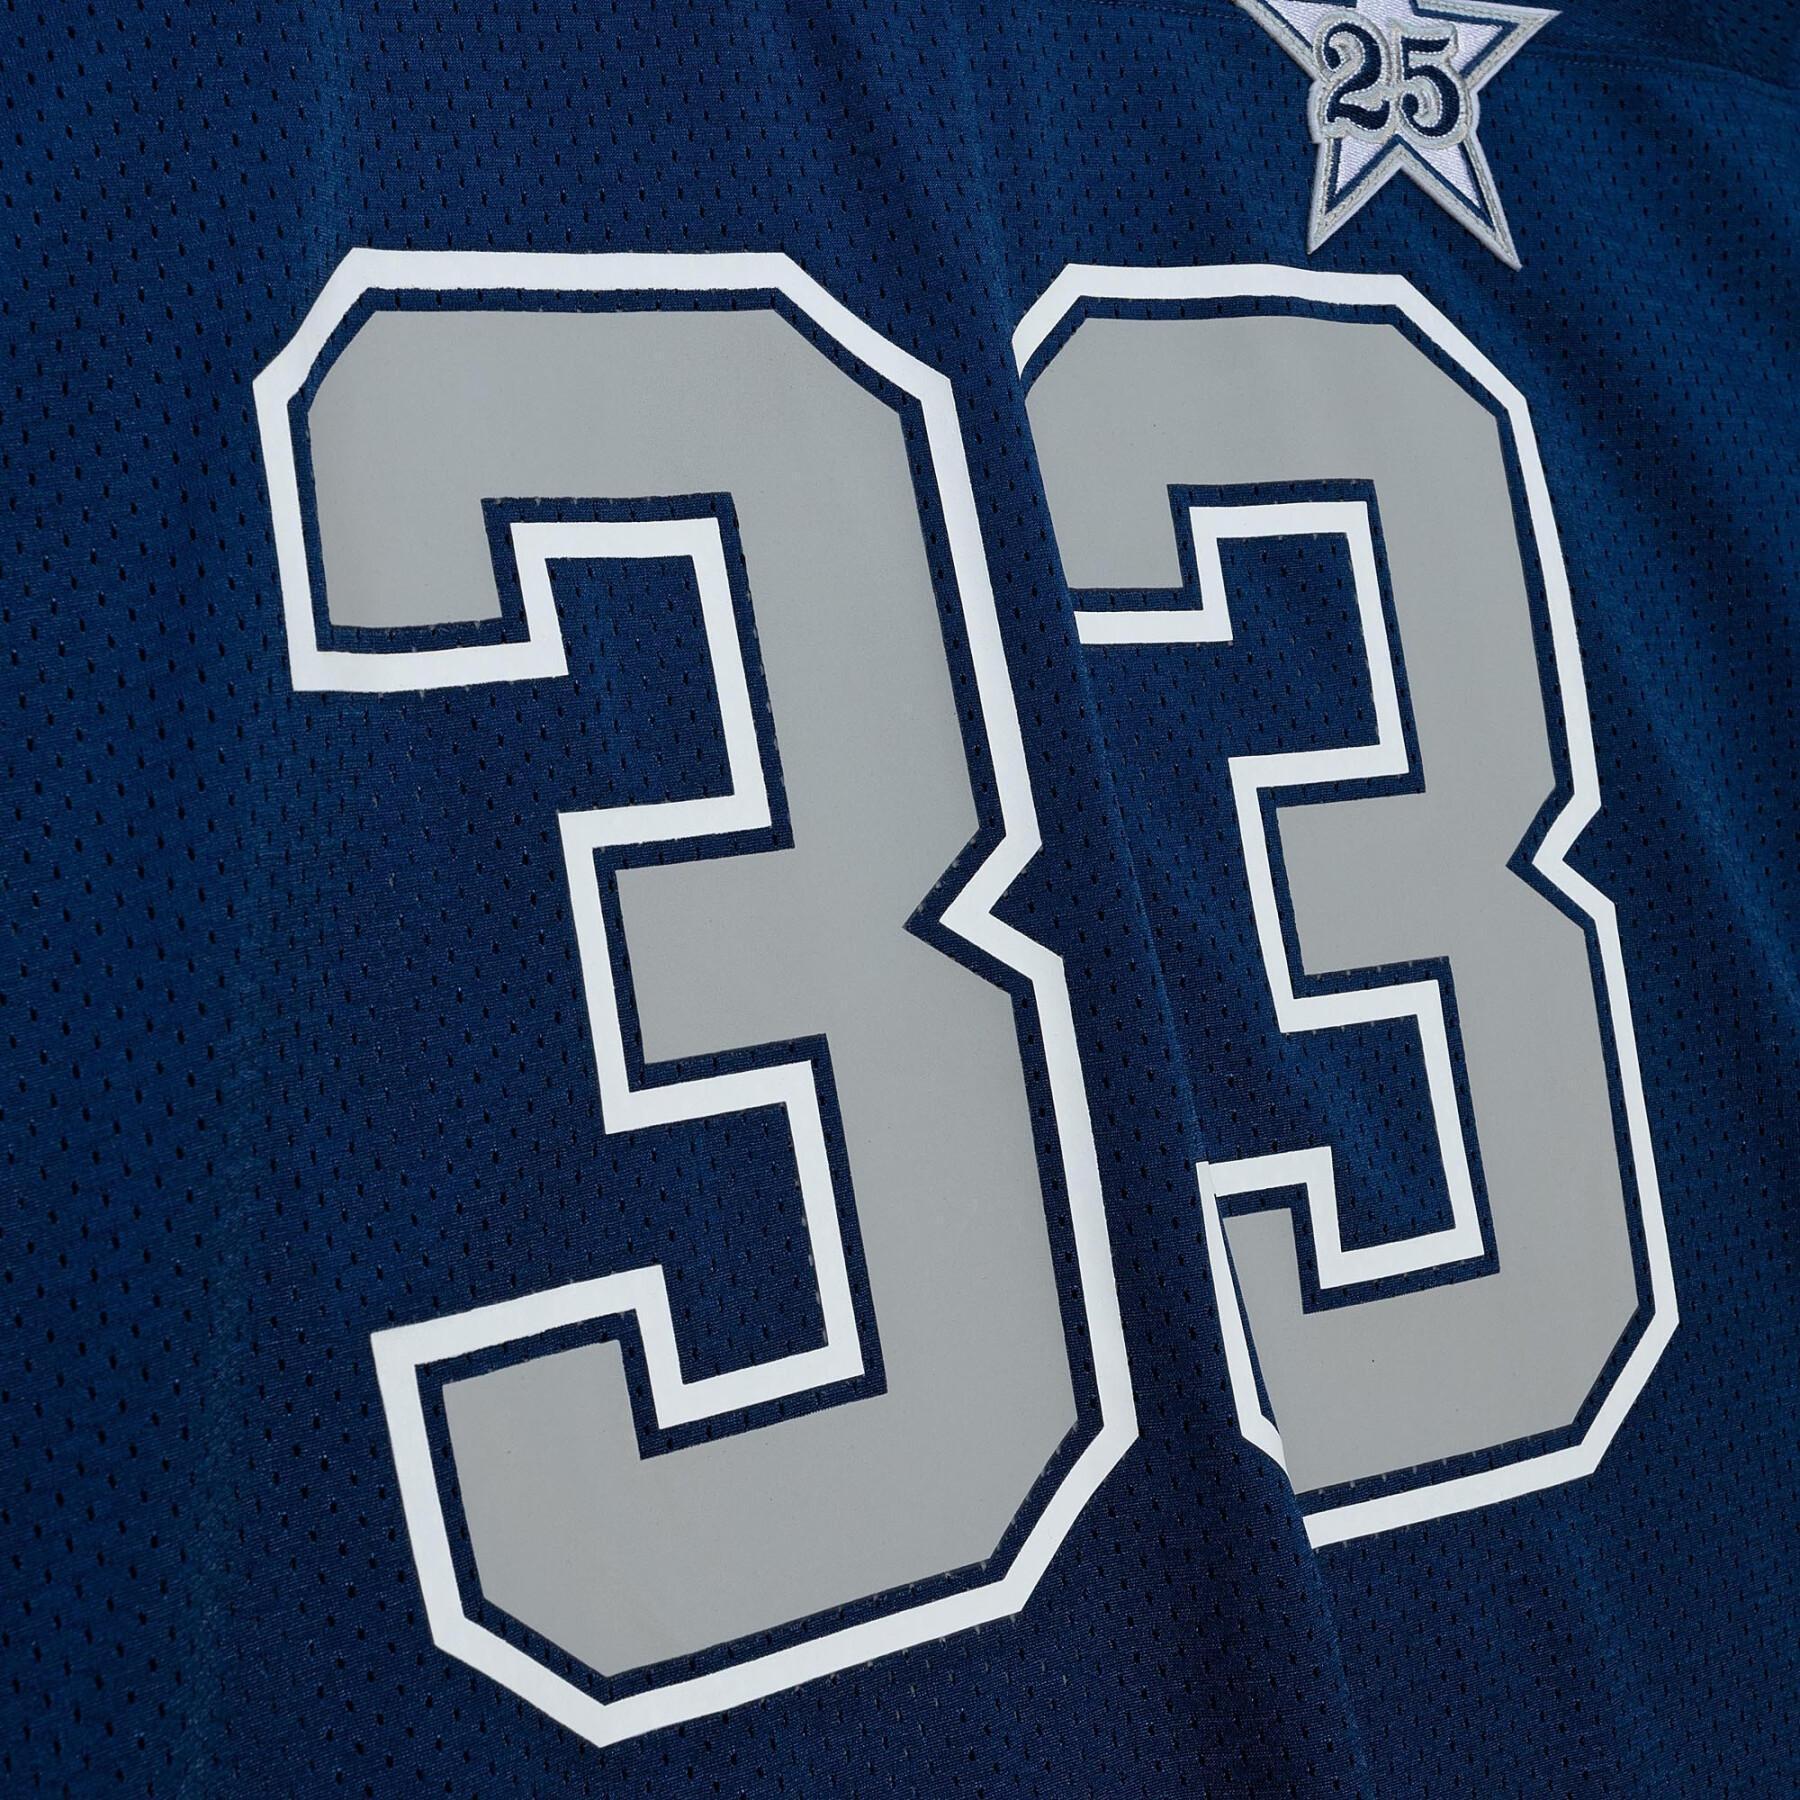 Camiseta auténtica Dallas Cowboys Tony Dorsett 1984